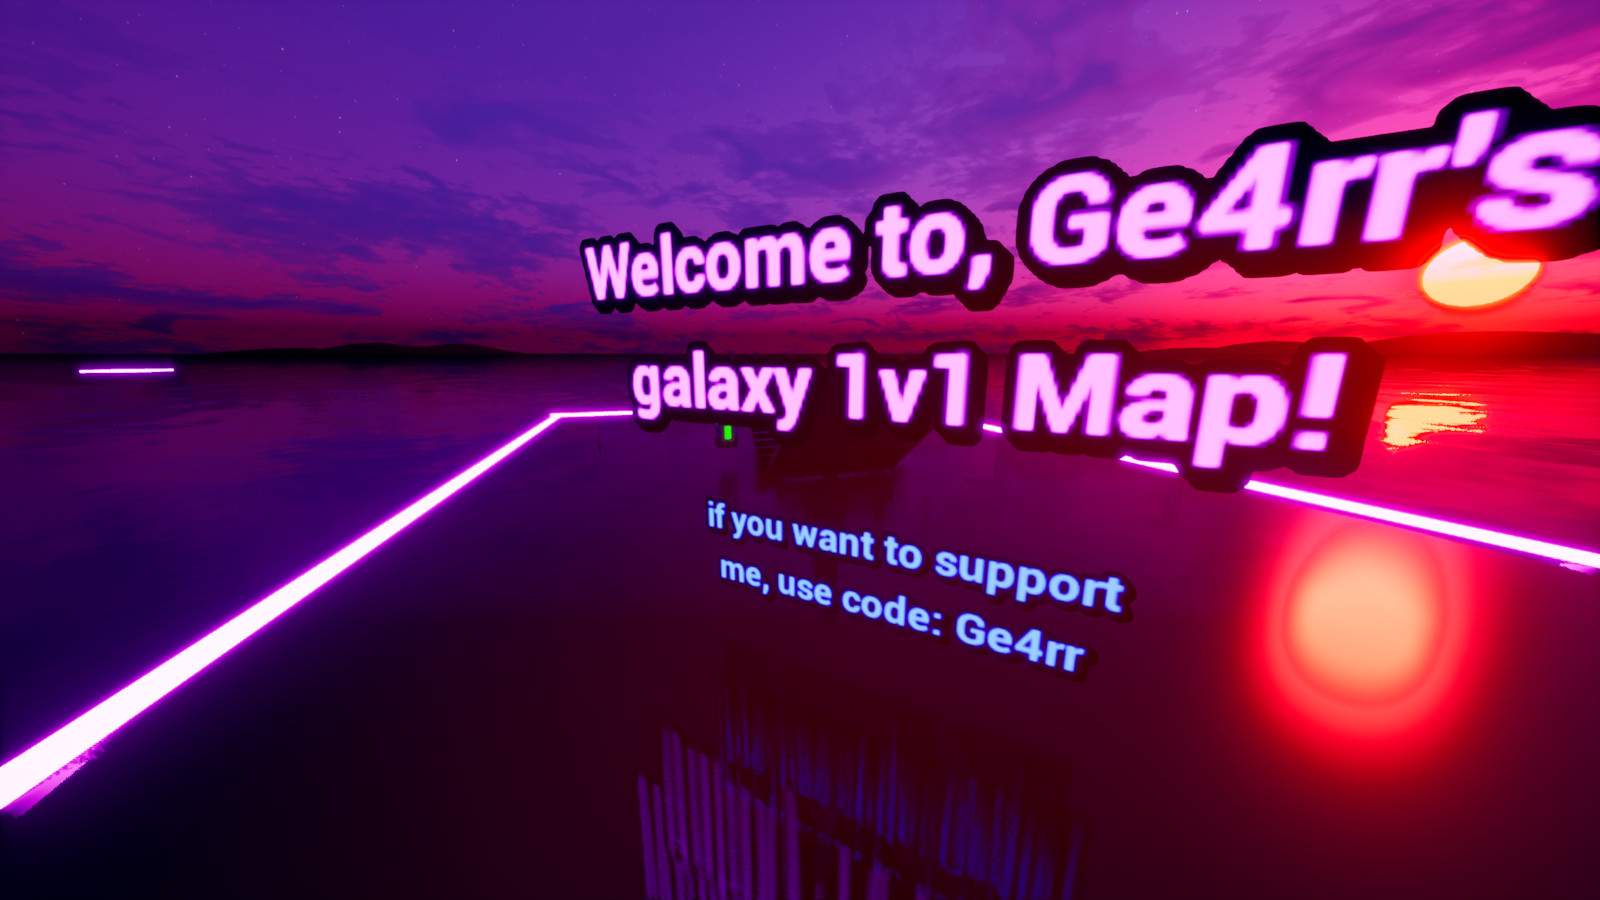 GE4RR'S GALAXY 1V1